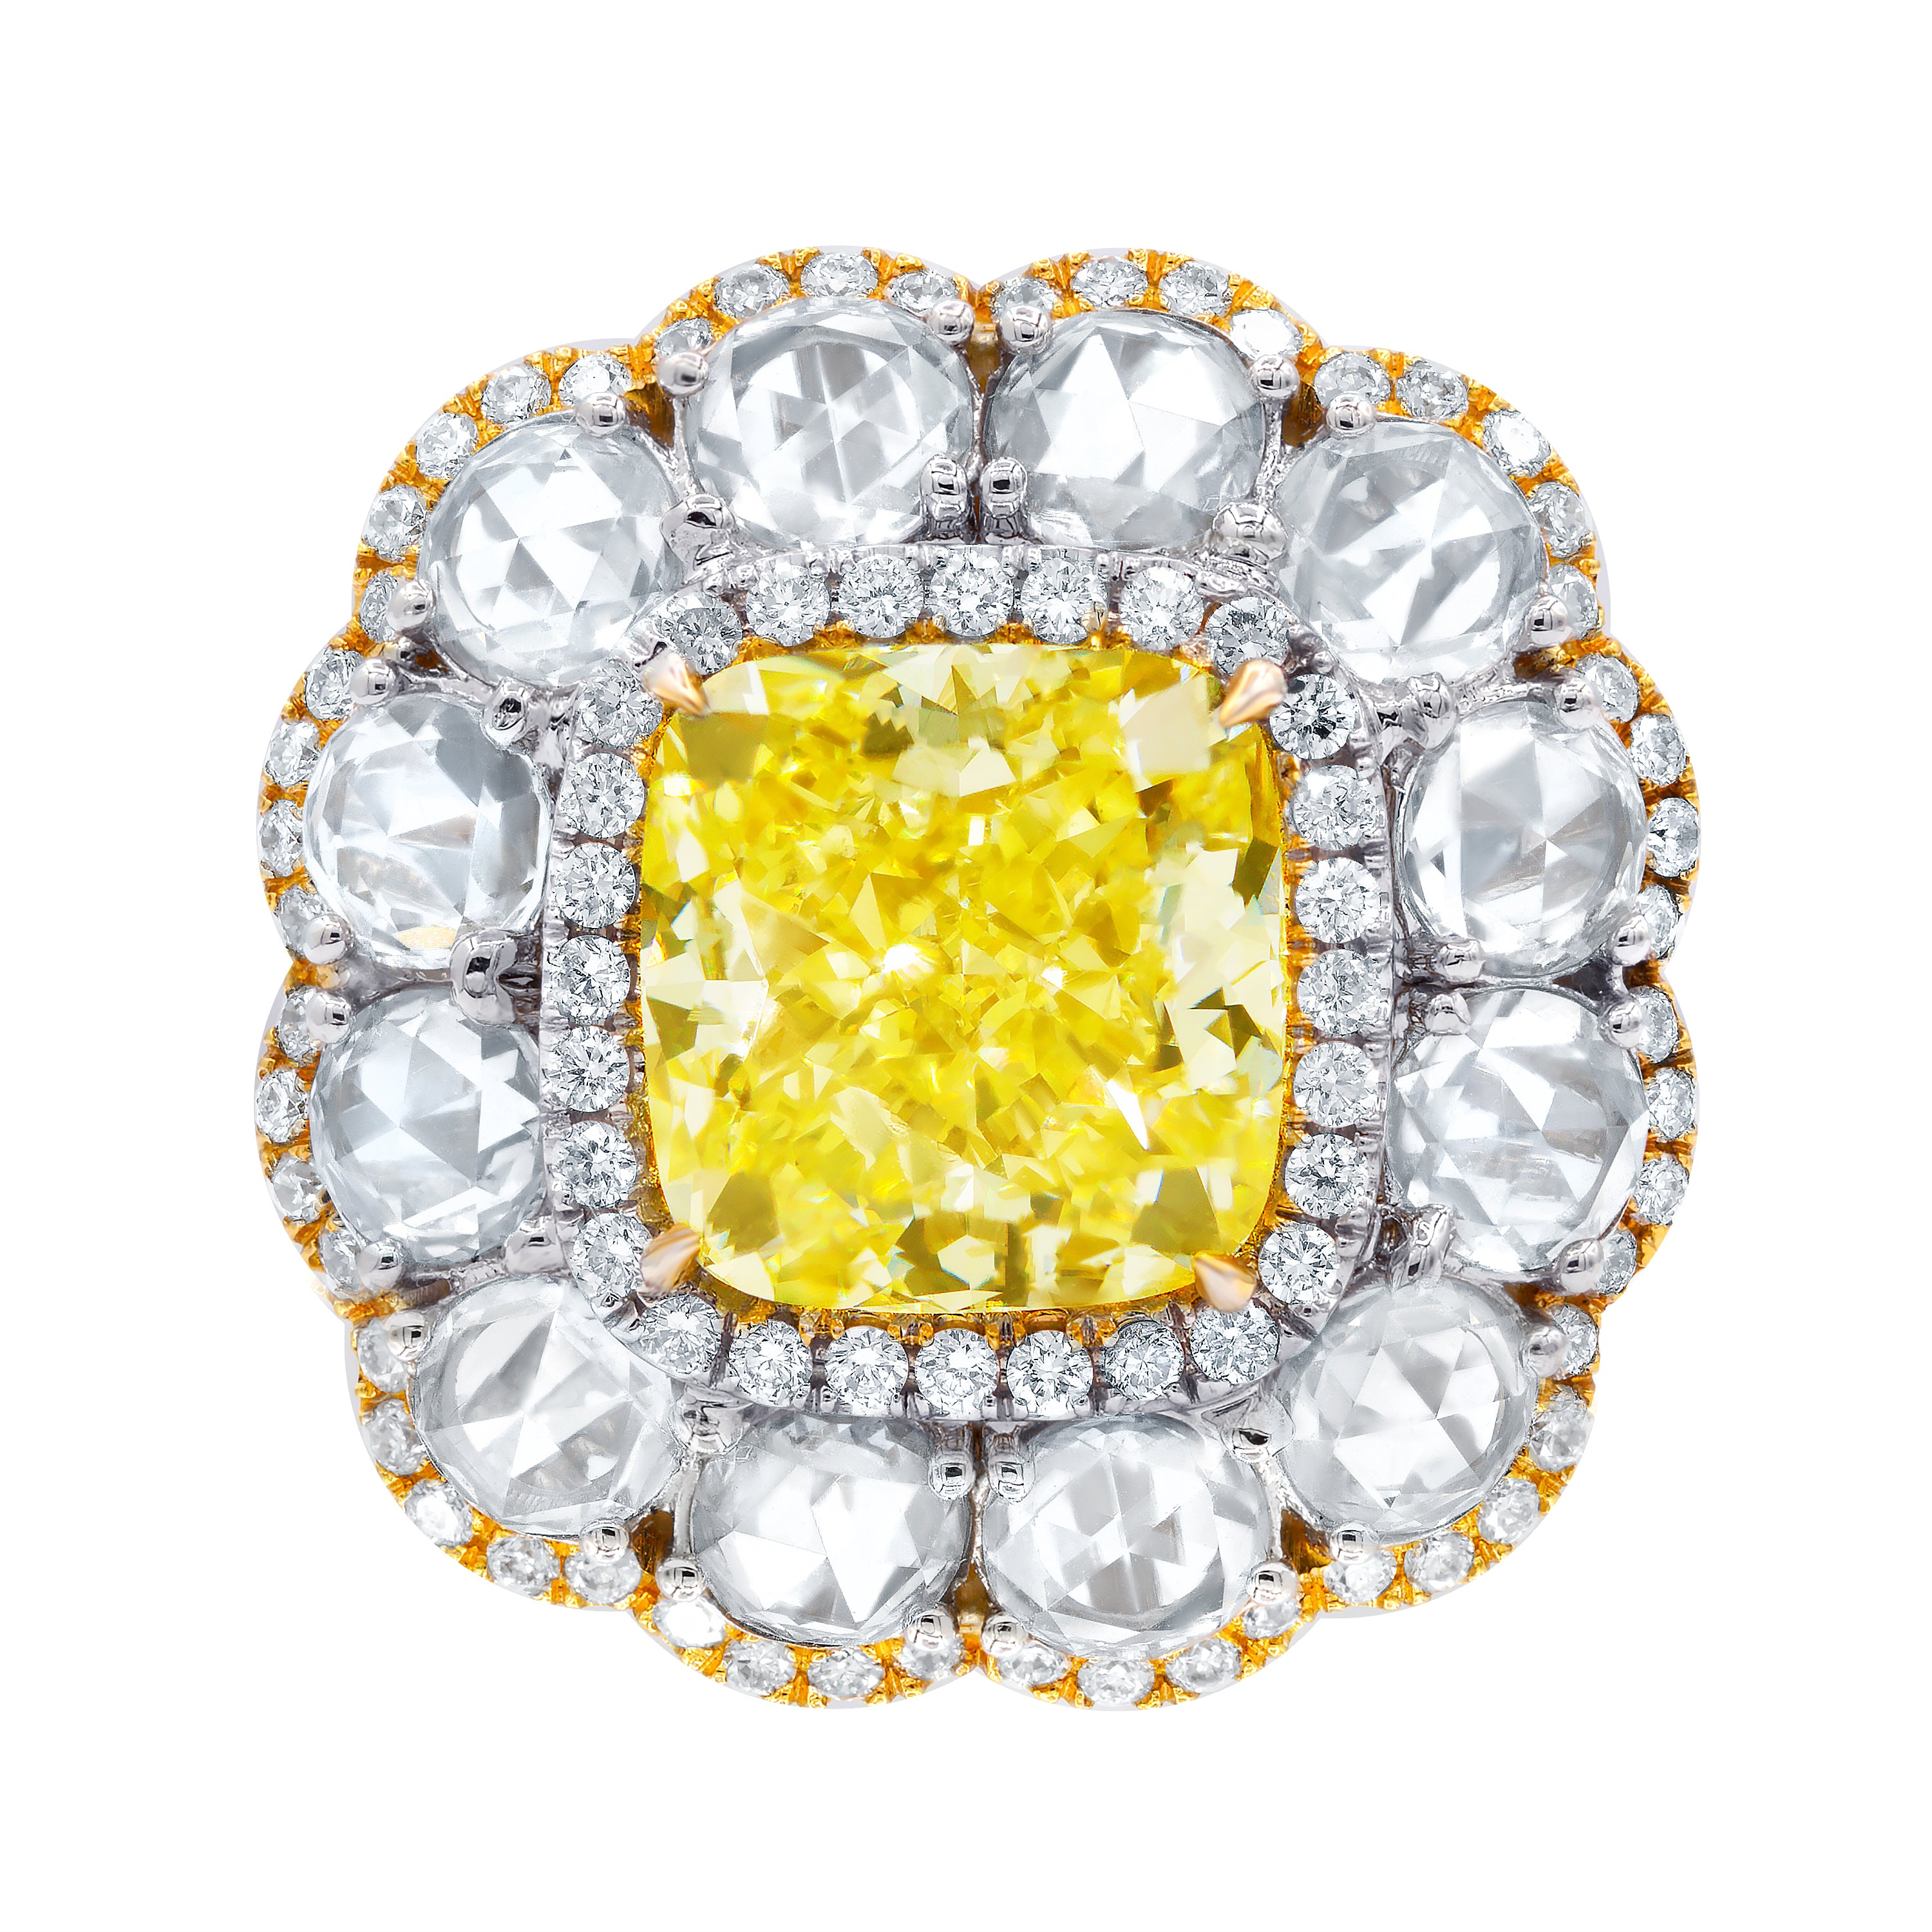 6.16ct Fancy Yellow Cushion Cut Diamond Ring